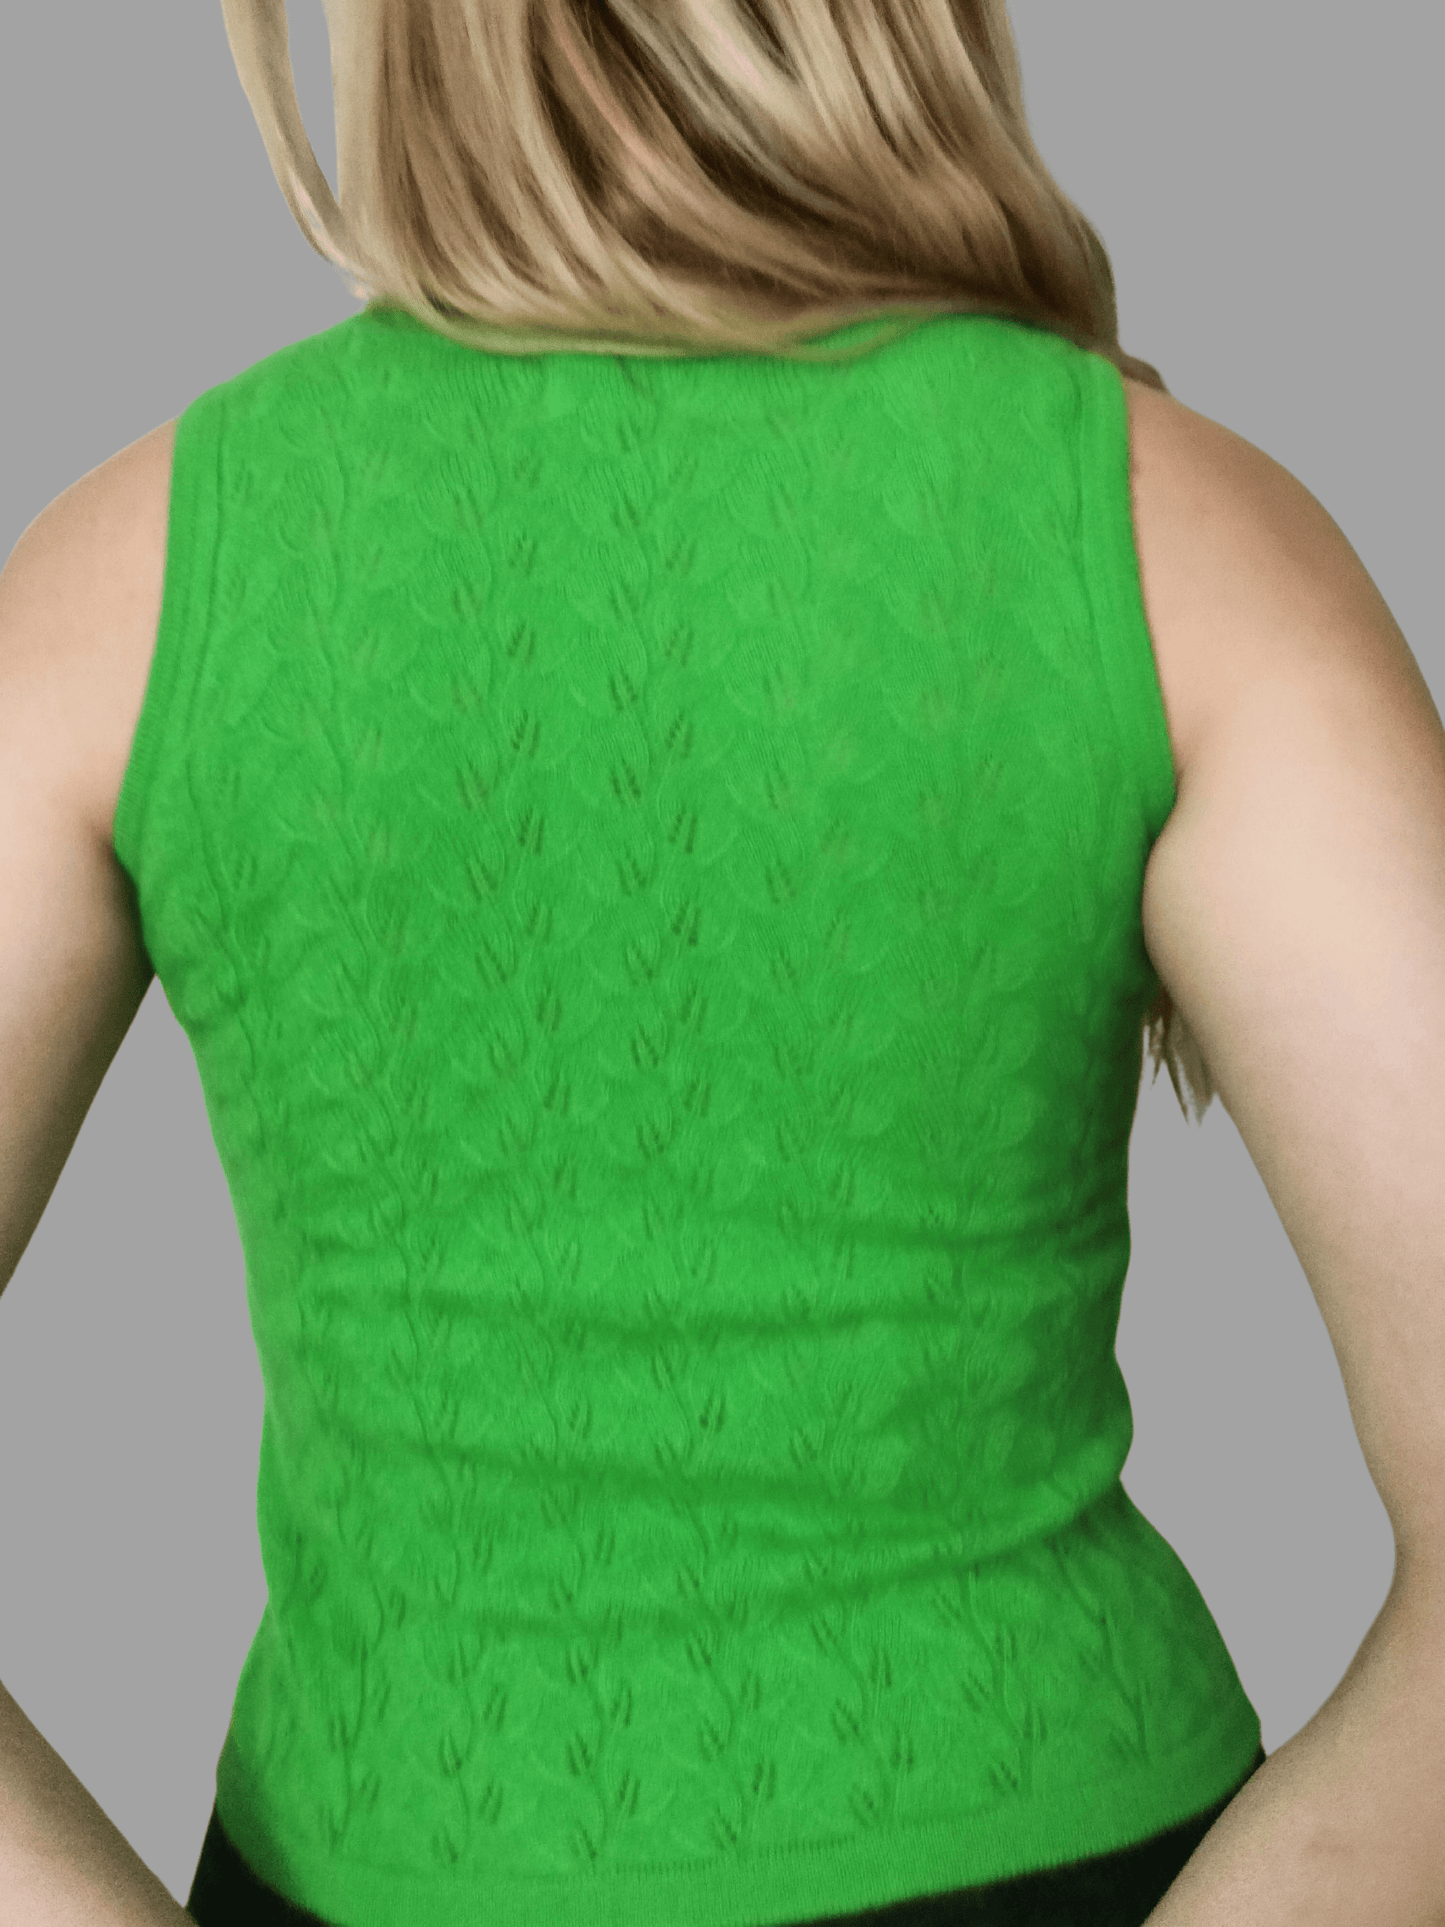 100% Cashmere Women's Knitwear Sleeveless Sweater Cashmere Vest Tank Top Vibrant Green